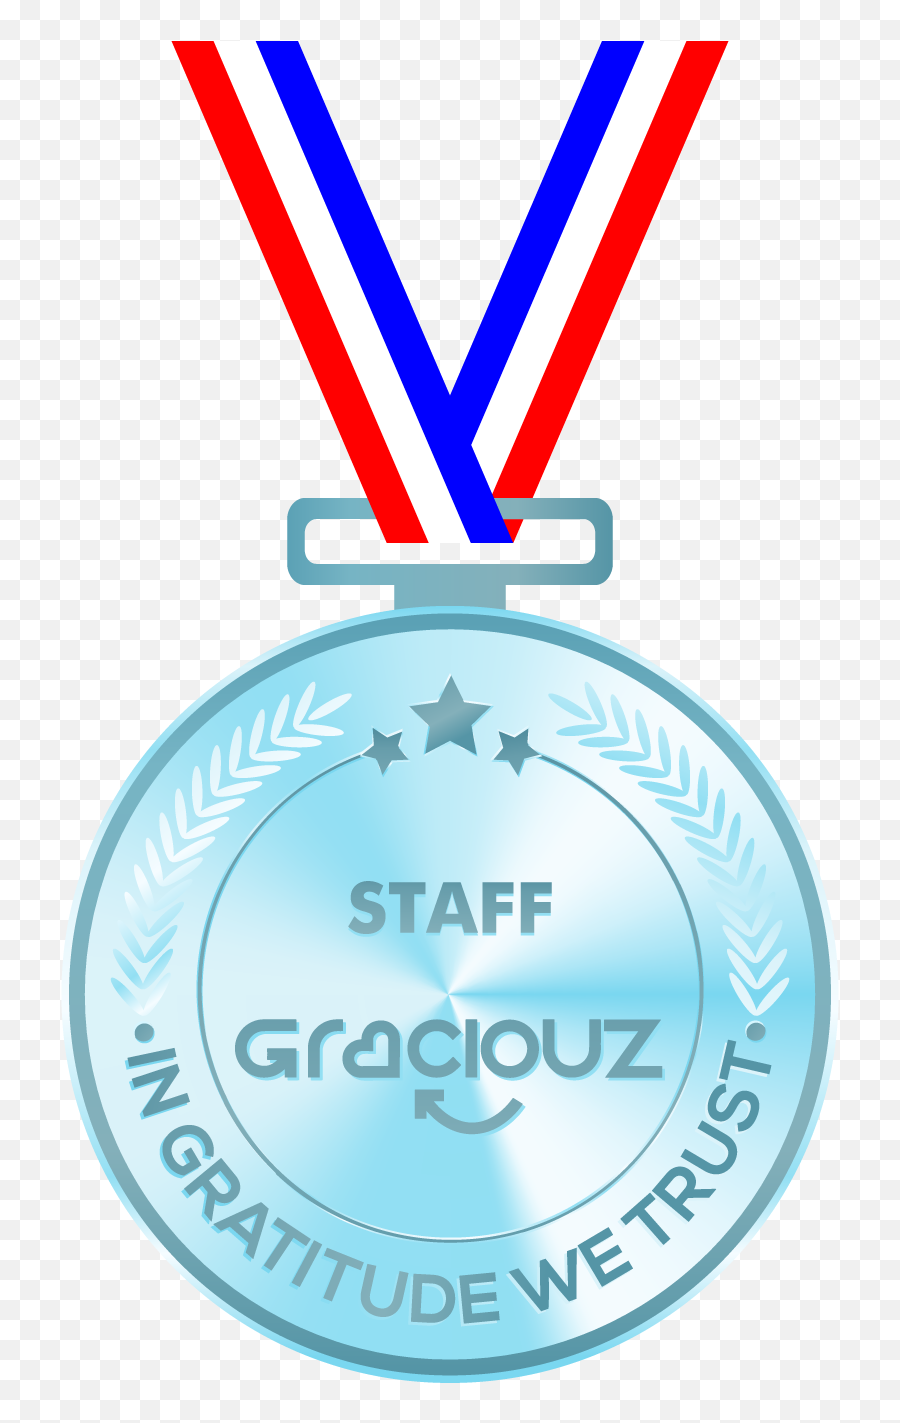 Grazme - Customer Reviews For Businesses On Business Circle Emoji,Silver Medal Emoji